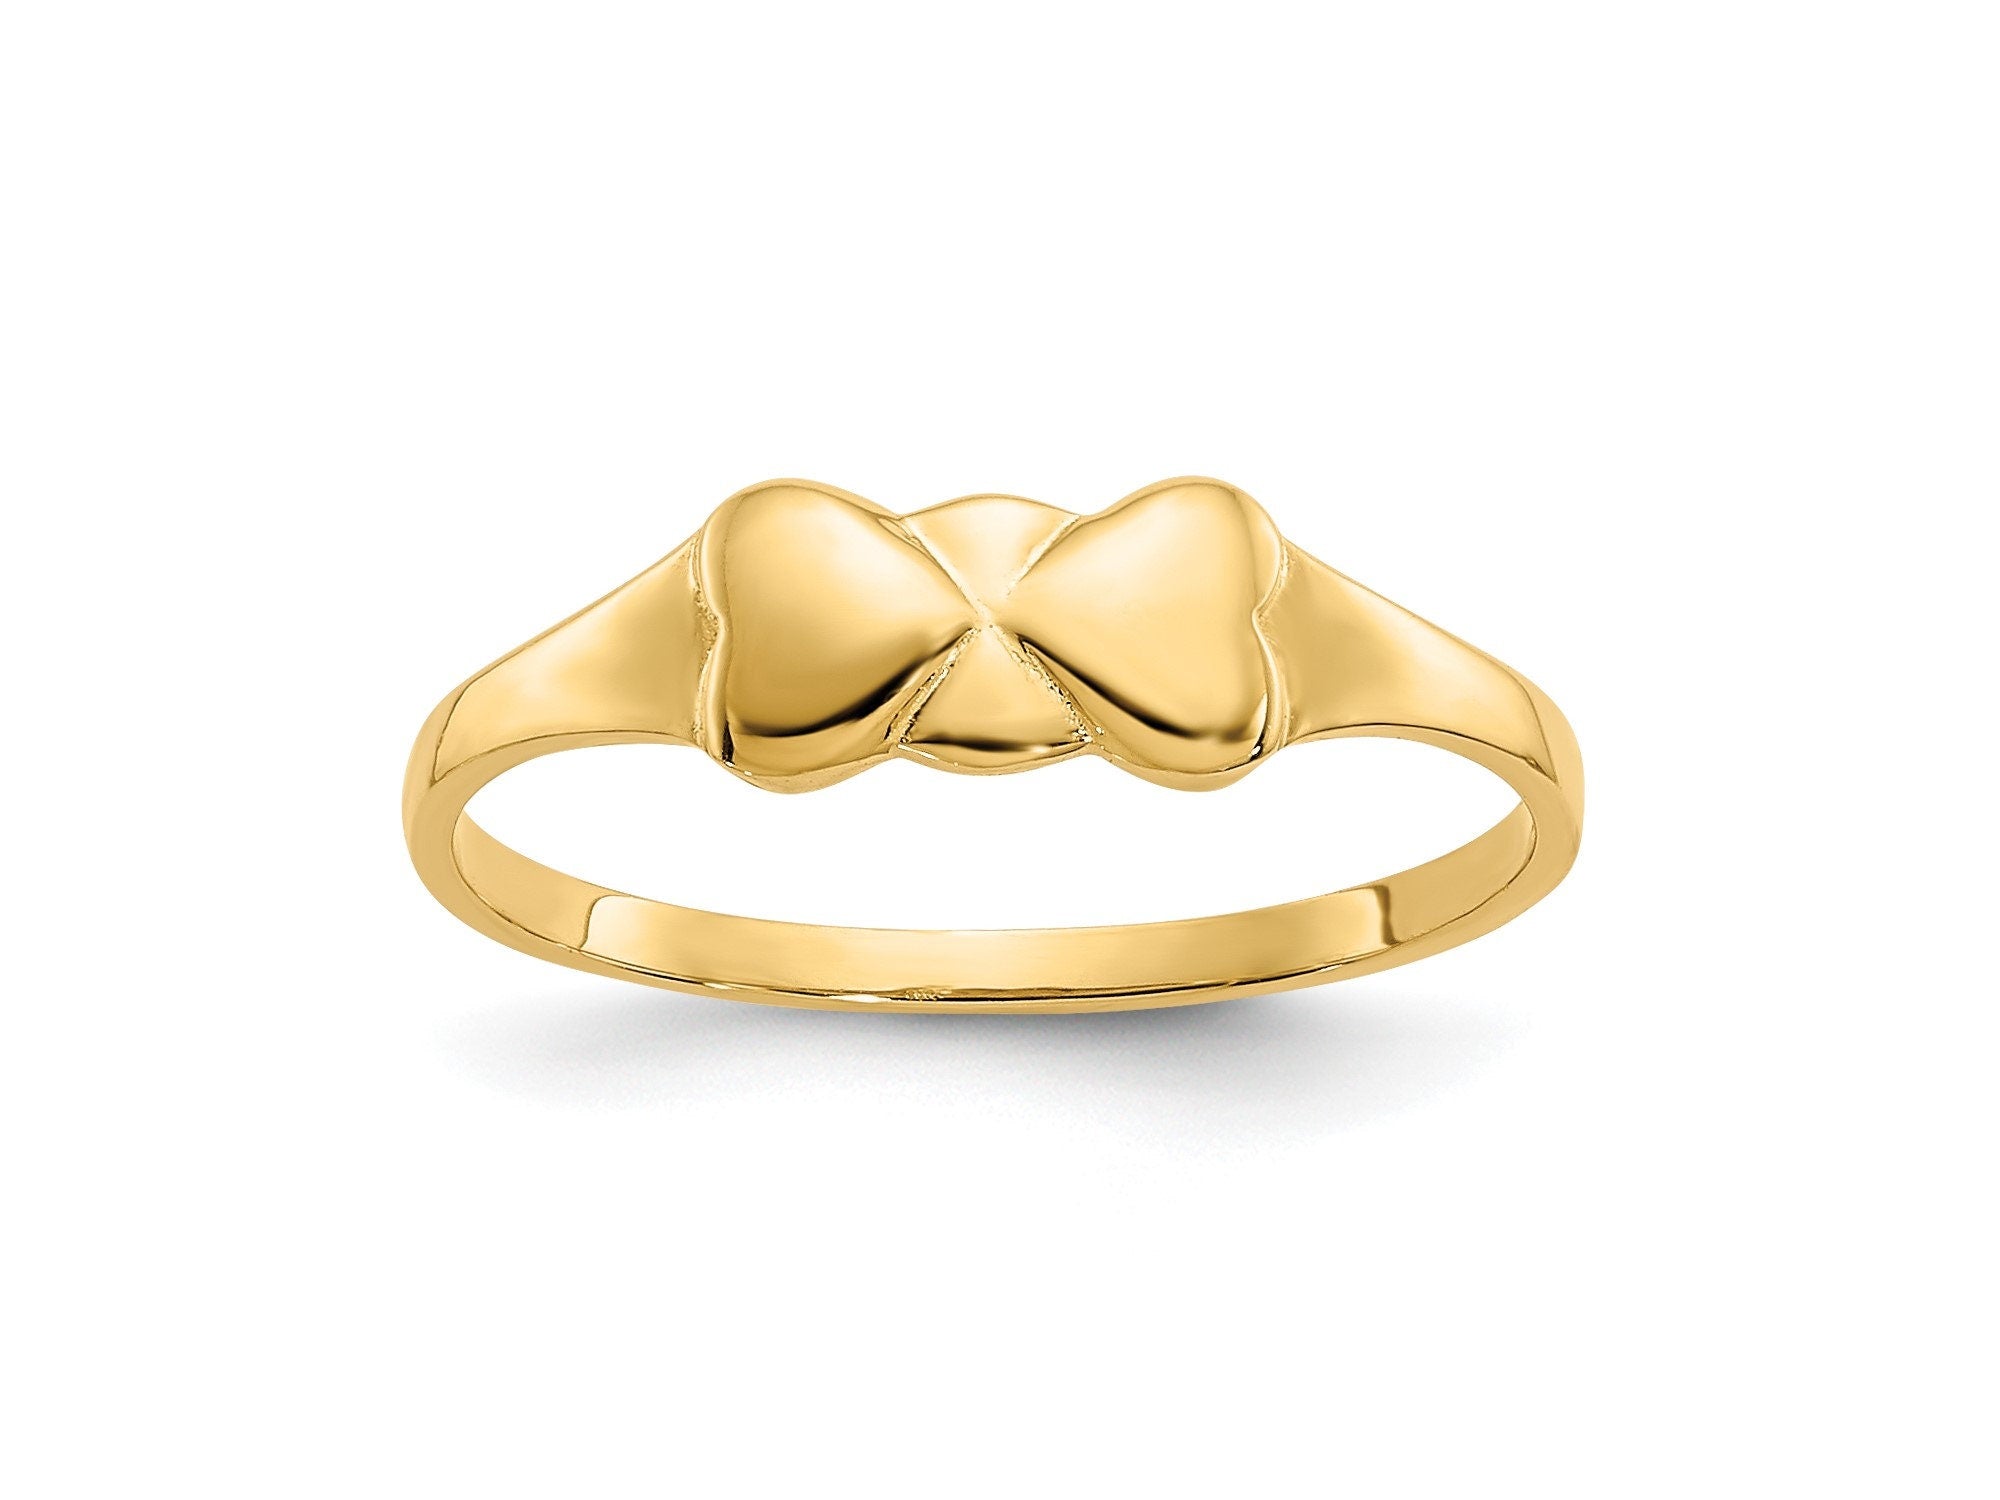 Staple Ring Designs Every Fashionista Must Have | HerZindagi